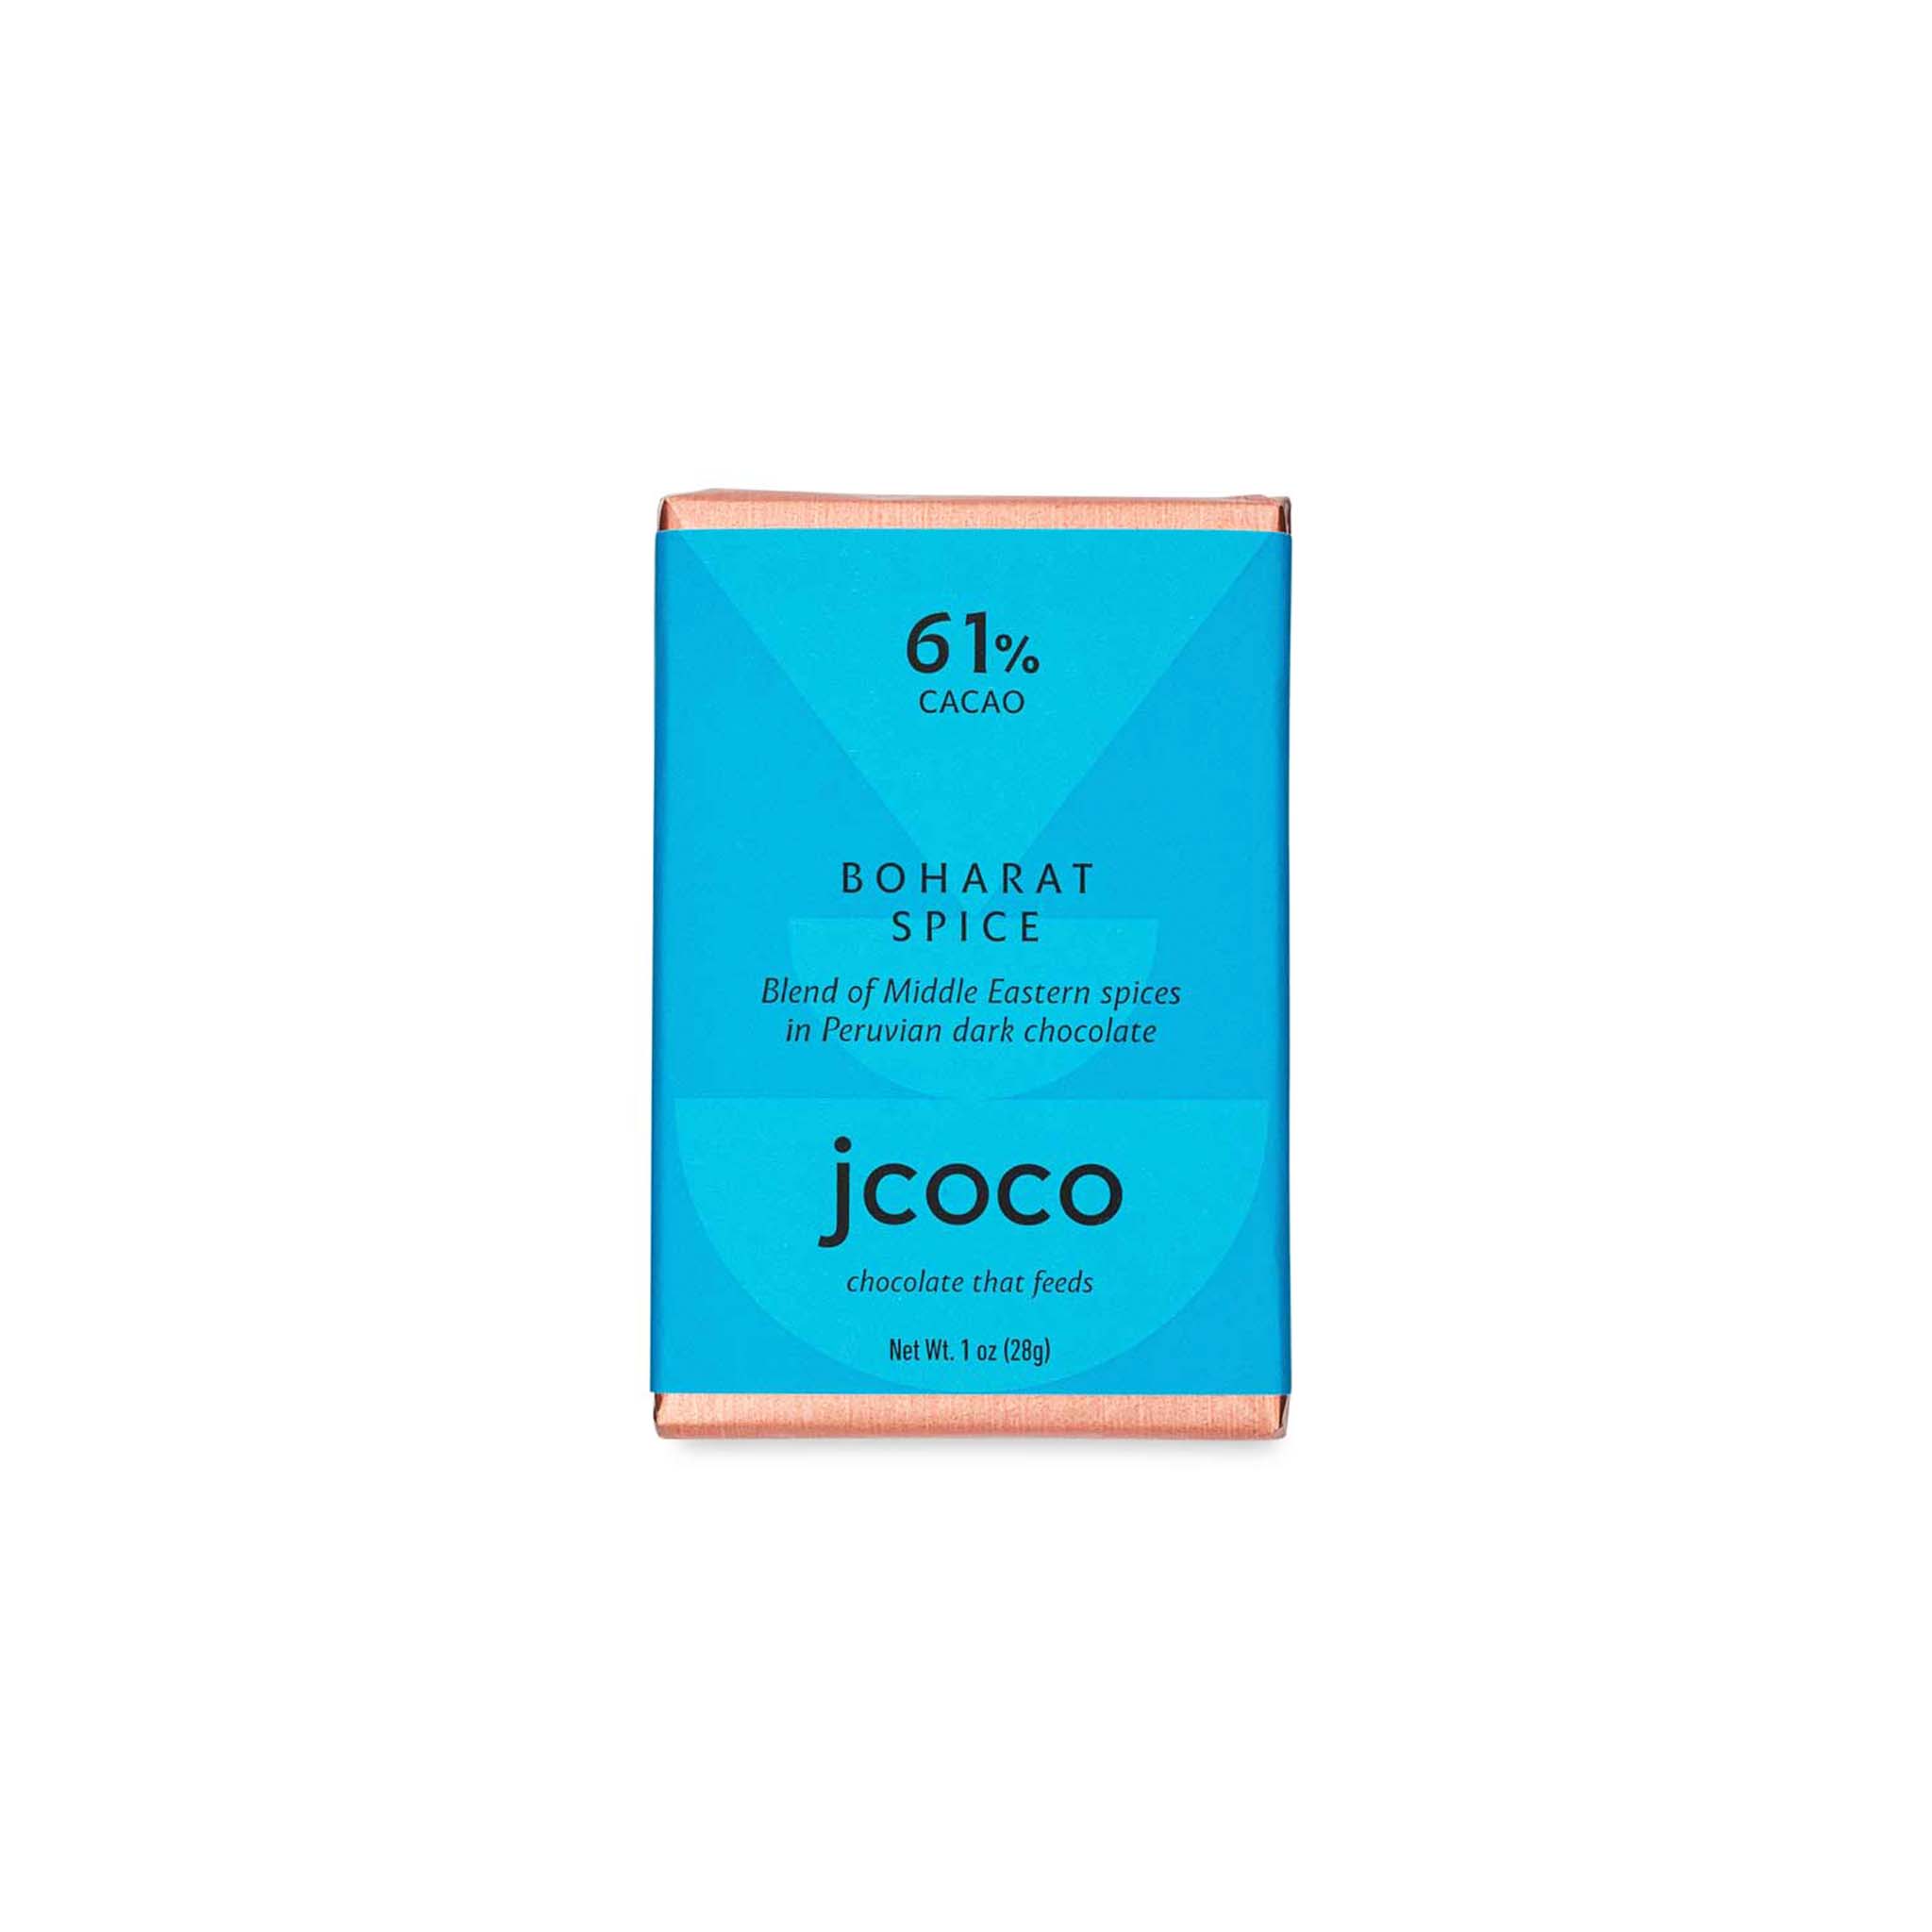 JCOCO BOHARAT SPICE 61% DARK CHOCOLATE 28G